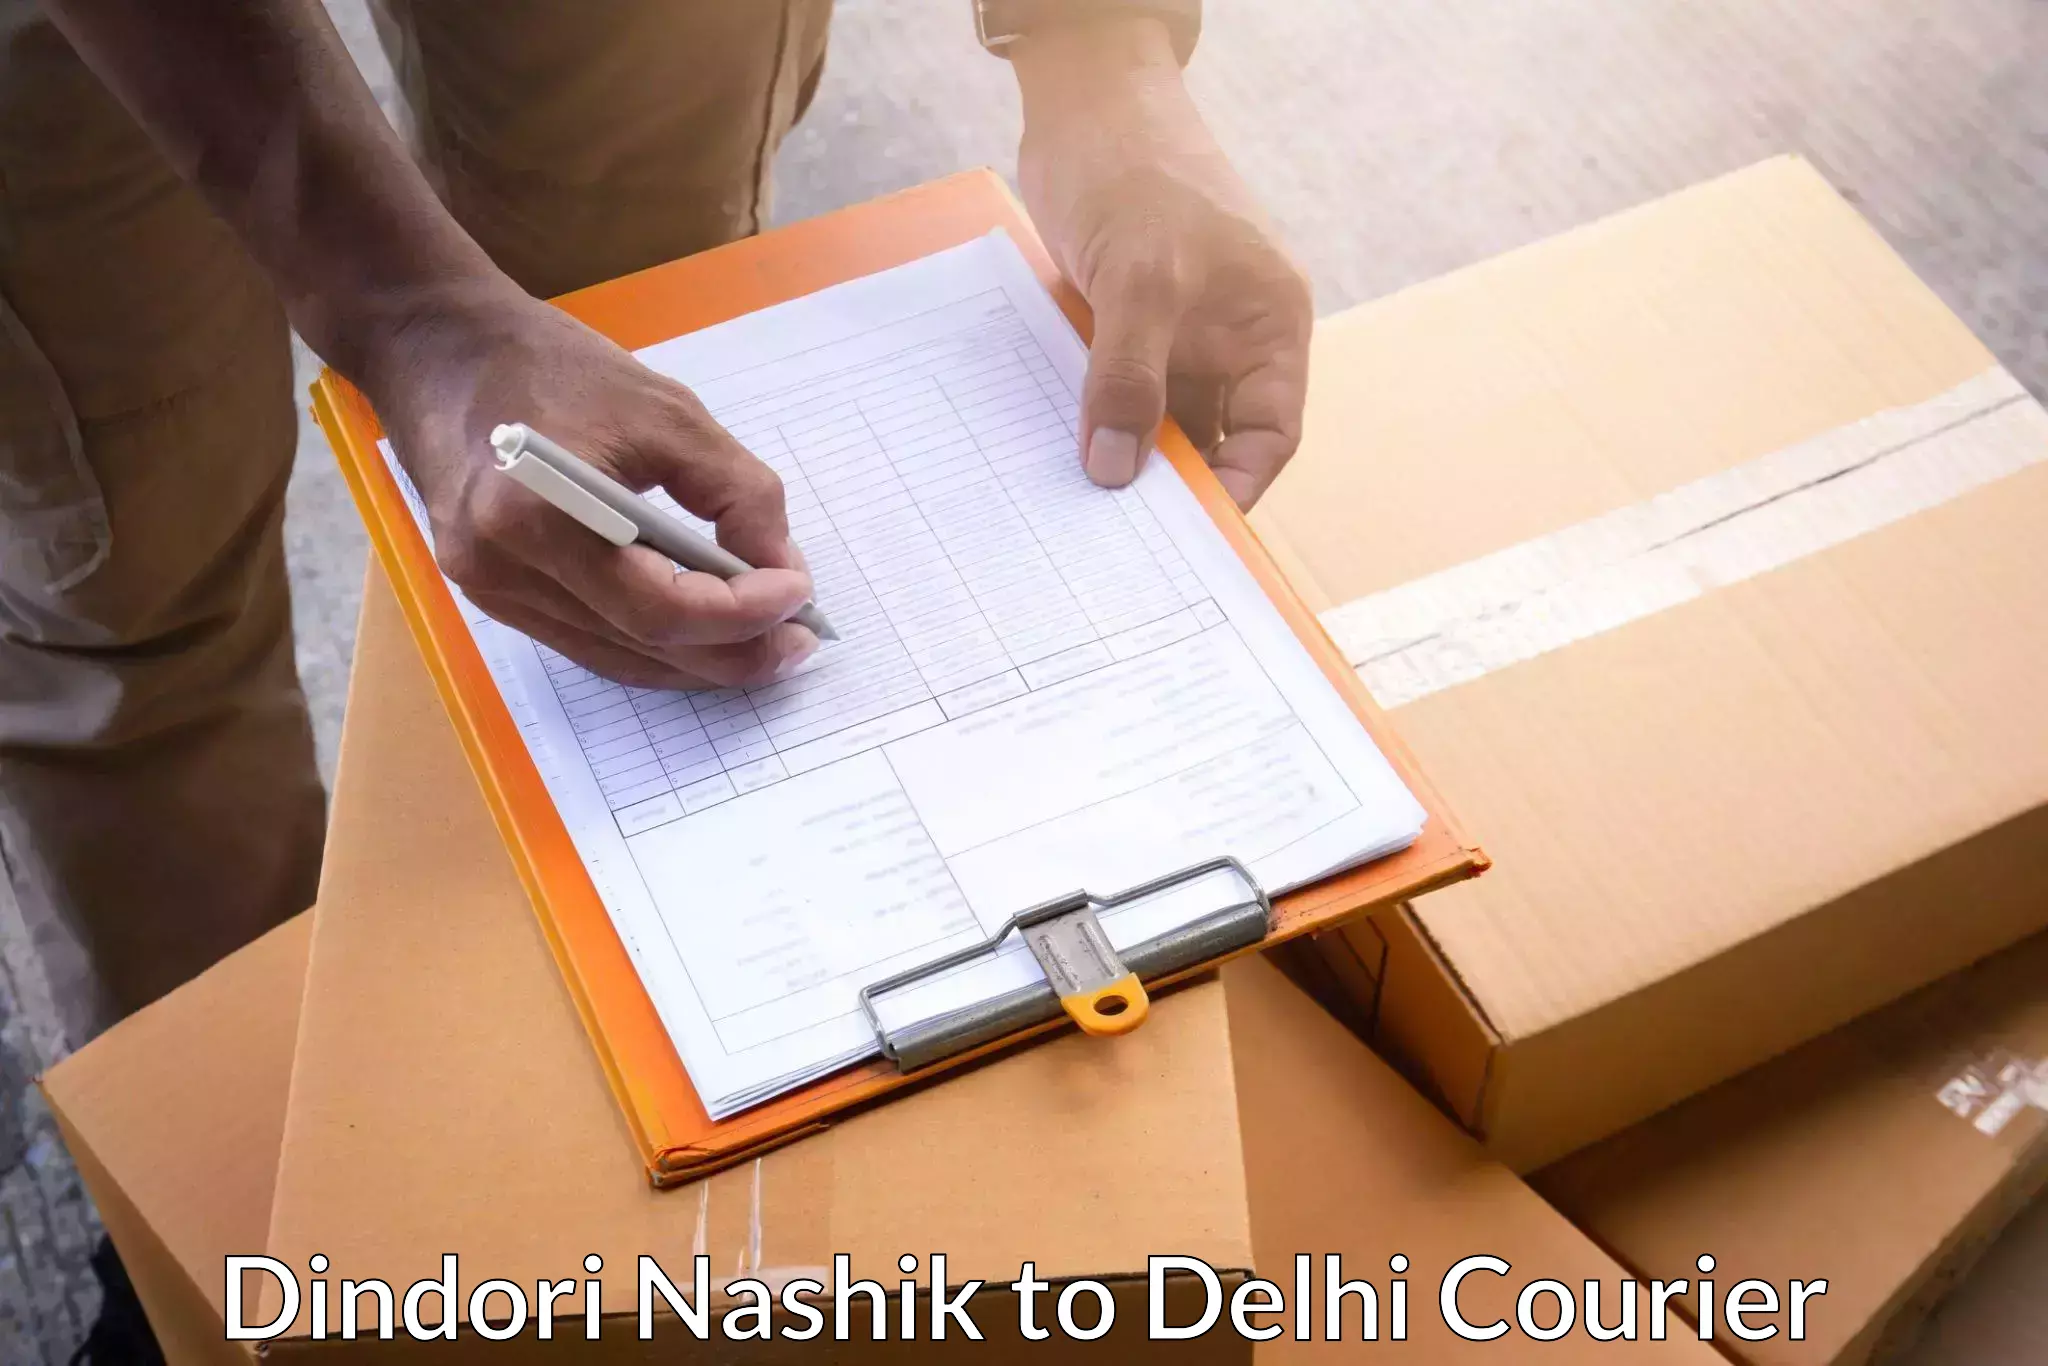 Global shipping solutions Dindori Nashik to Lodhi Road